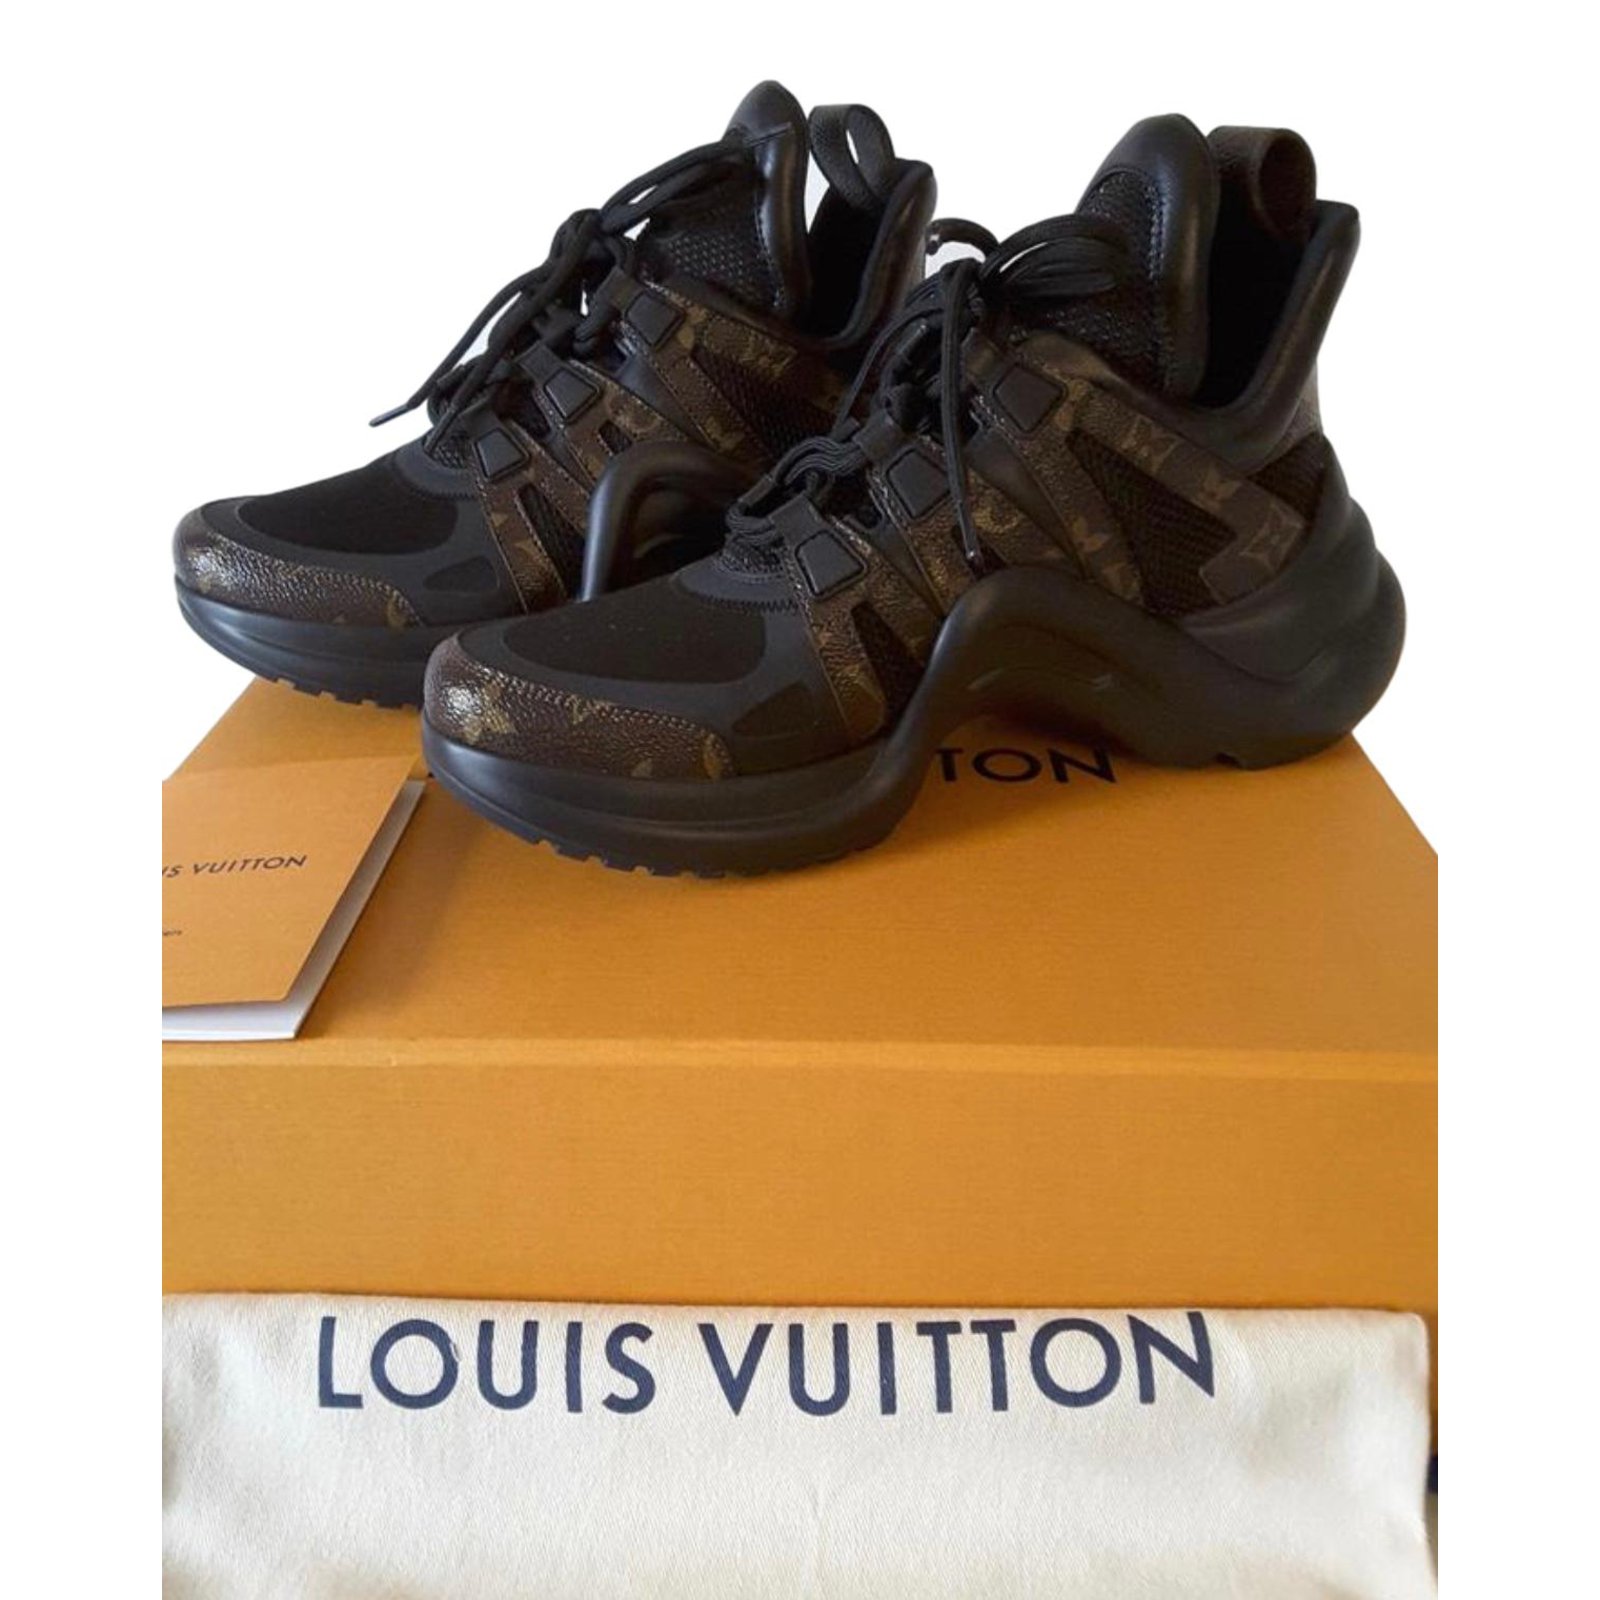 Louis Vuitton LV Archlight 2.0 Platform Sneaker BROWN. Size 38.0